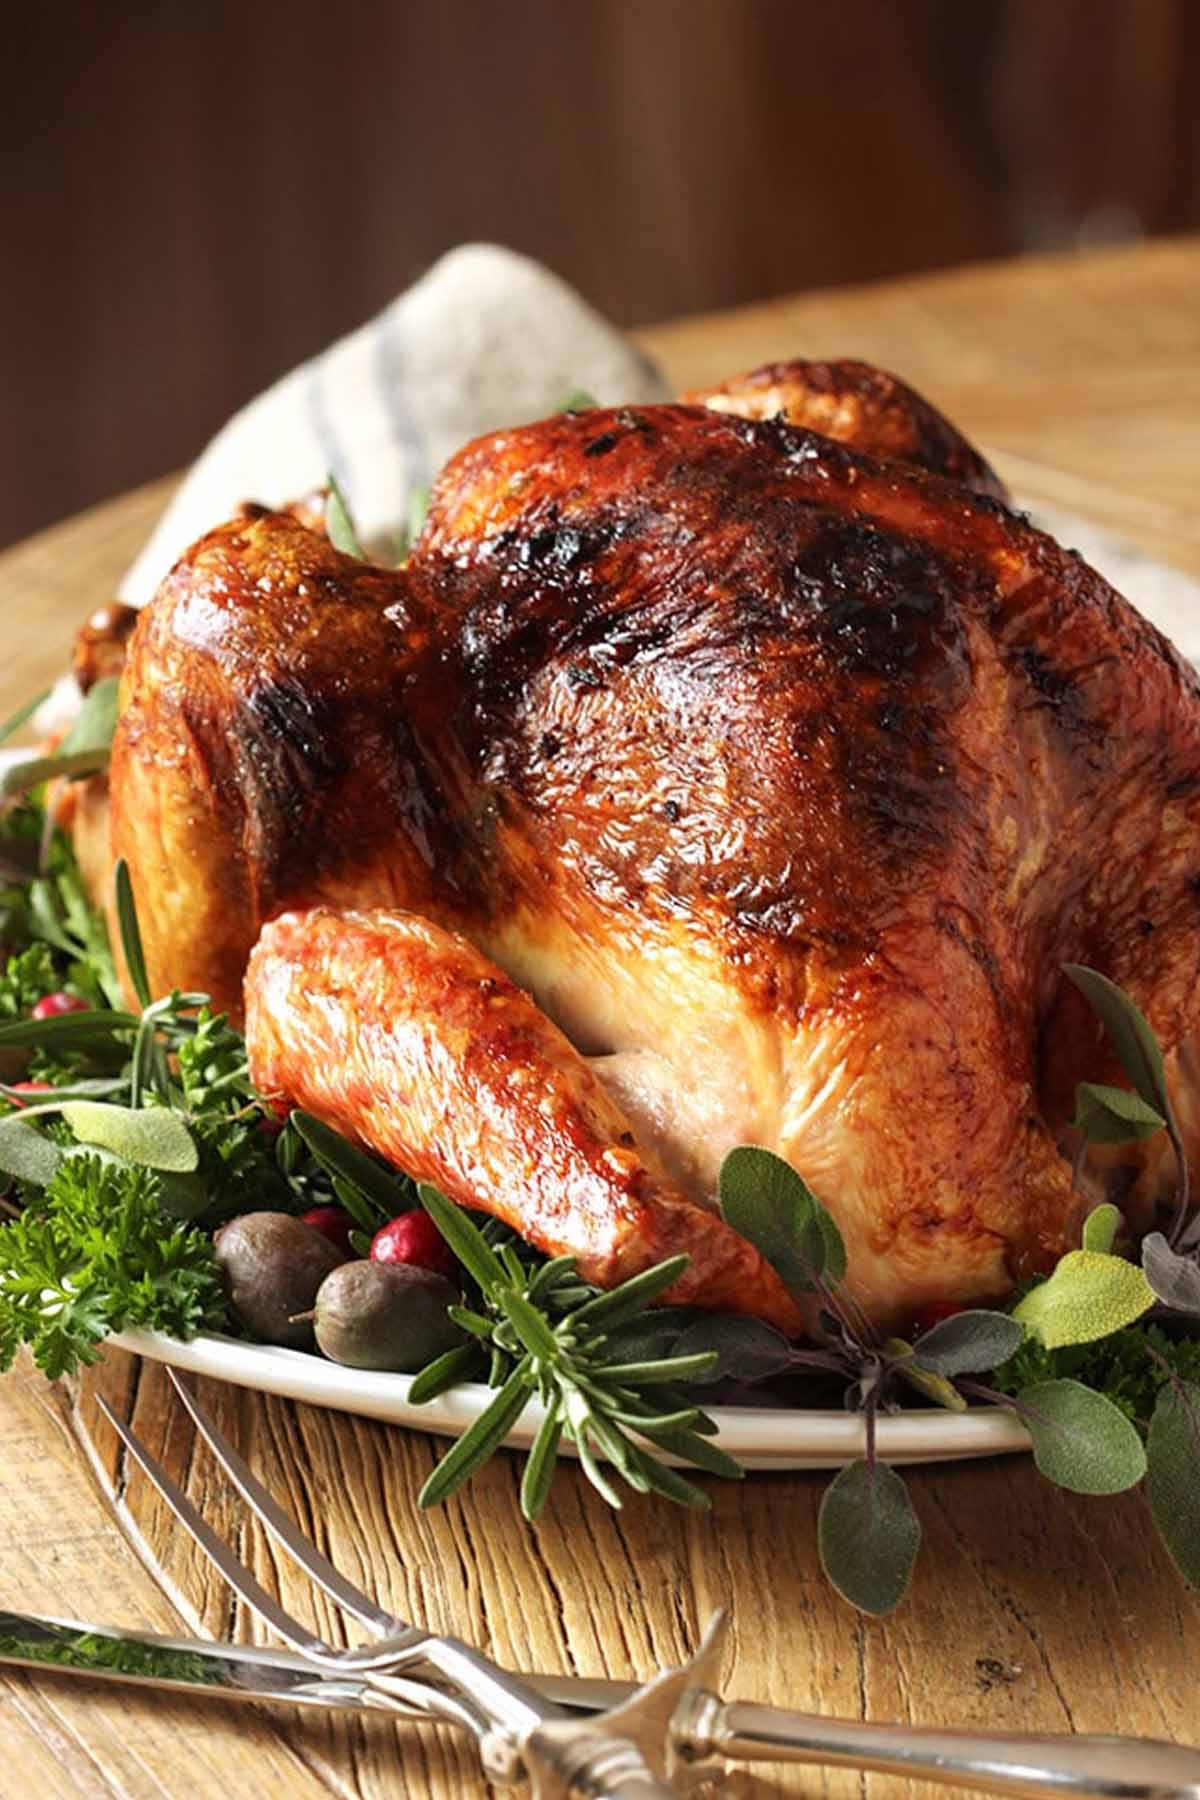 Recipes For Thanksgiving Turkey
 19 Best Thanksgiving Turkey Recipes Easy Roast Turkey